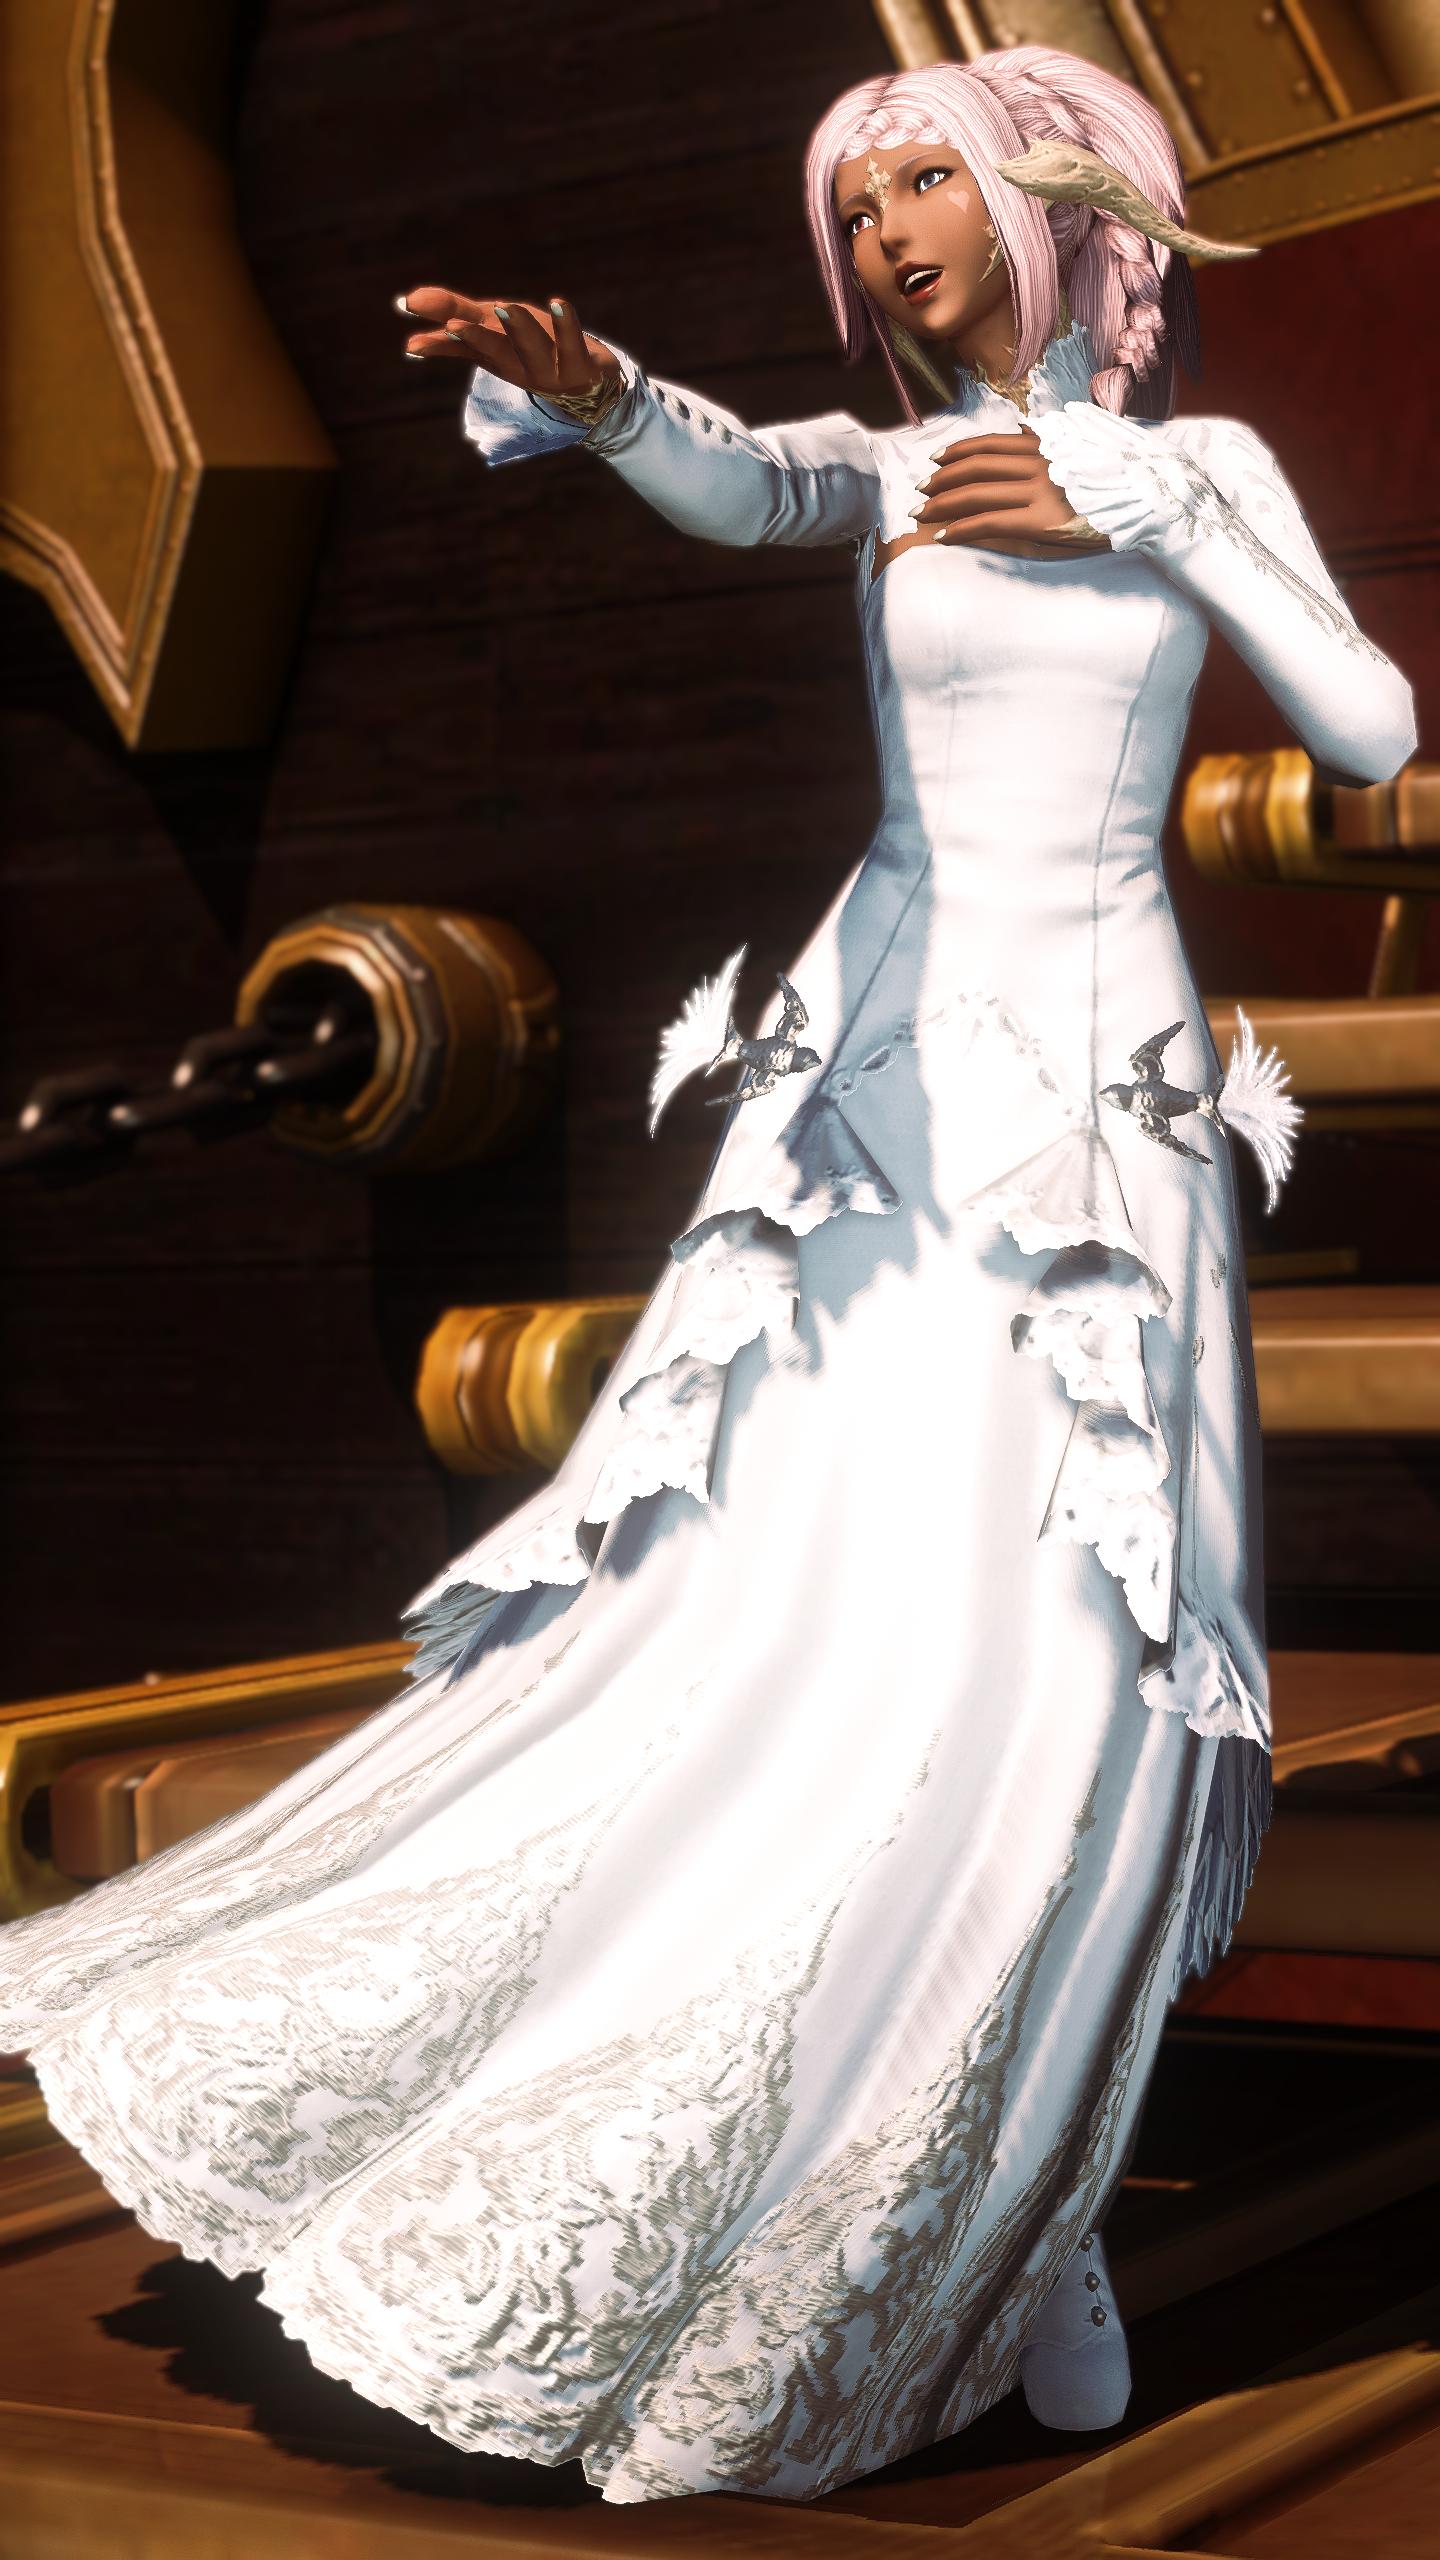 General 1440x2560 Final Fantasy XIV: A Realm Reborn reshade Au Ra weddings wedding dress portrait portrait display video games CGI video game girls video game characters dark skin